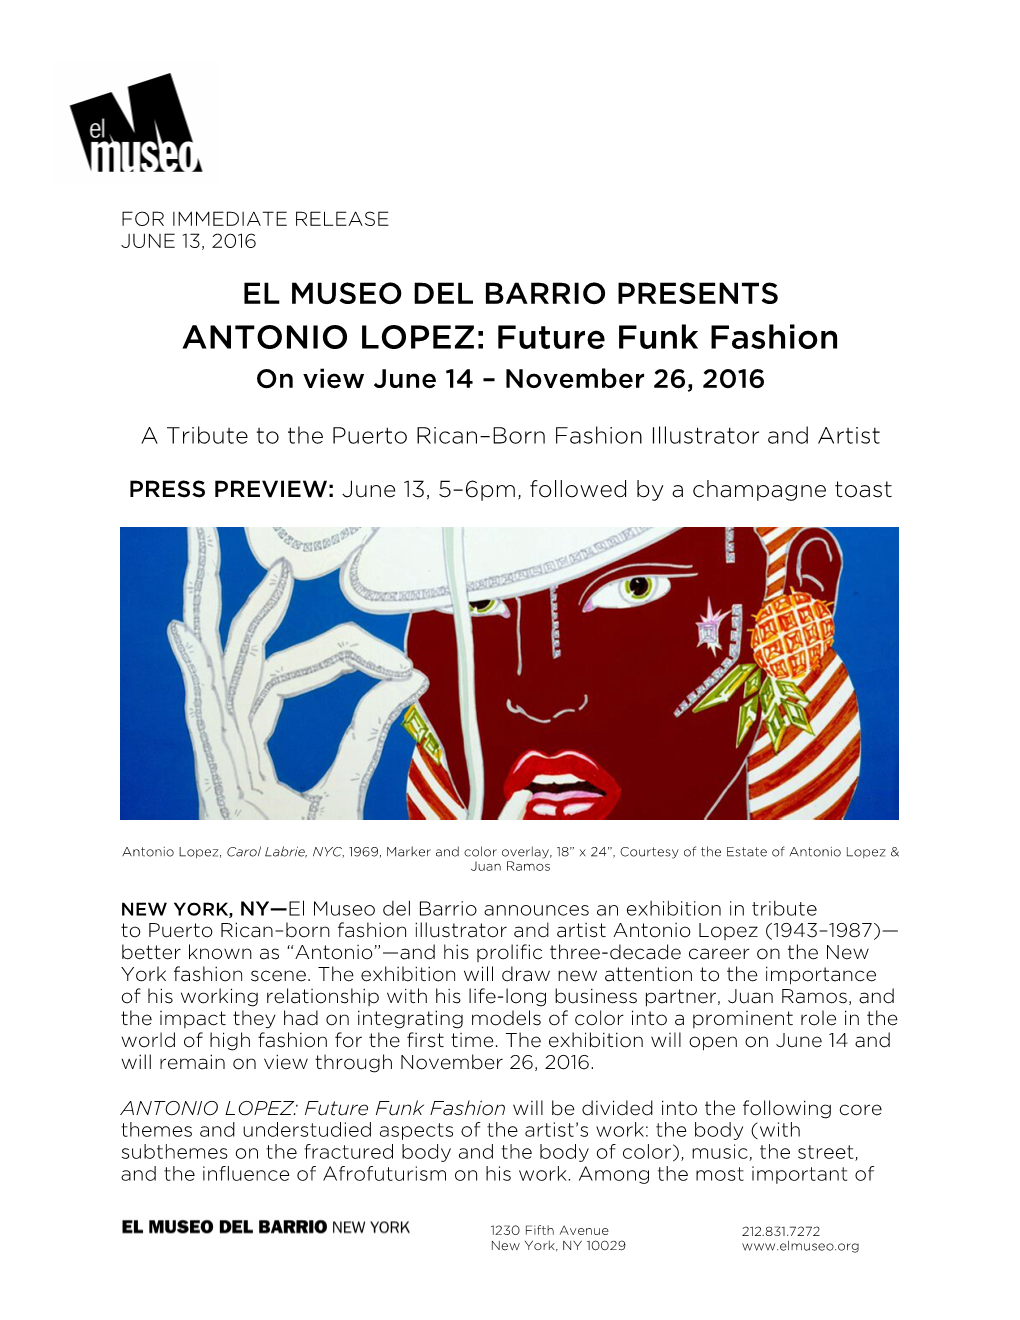 ANTONIO LOPEZ: Future Funk Fashion on View June 14 – November 26, 2016